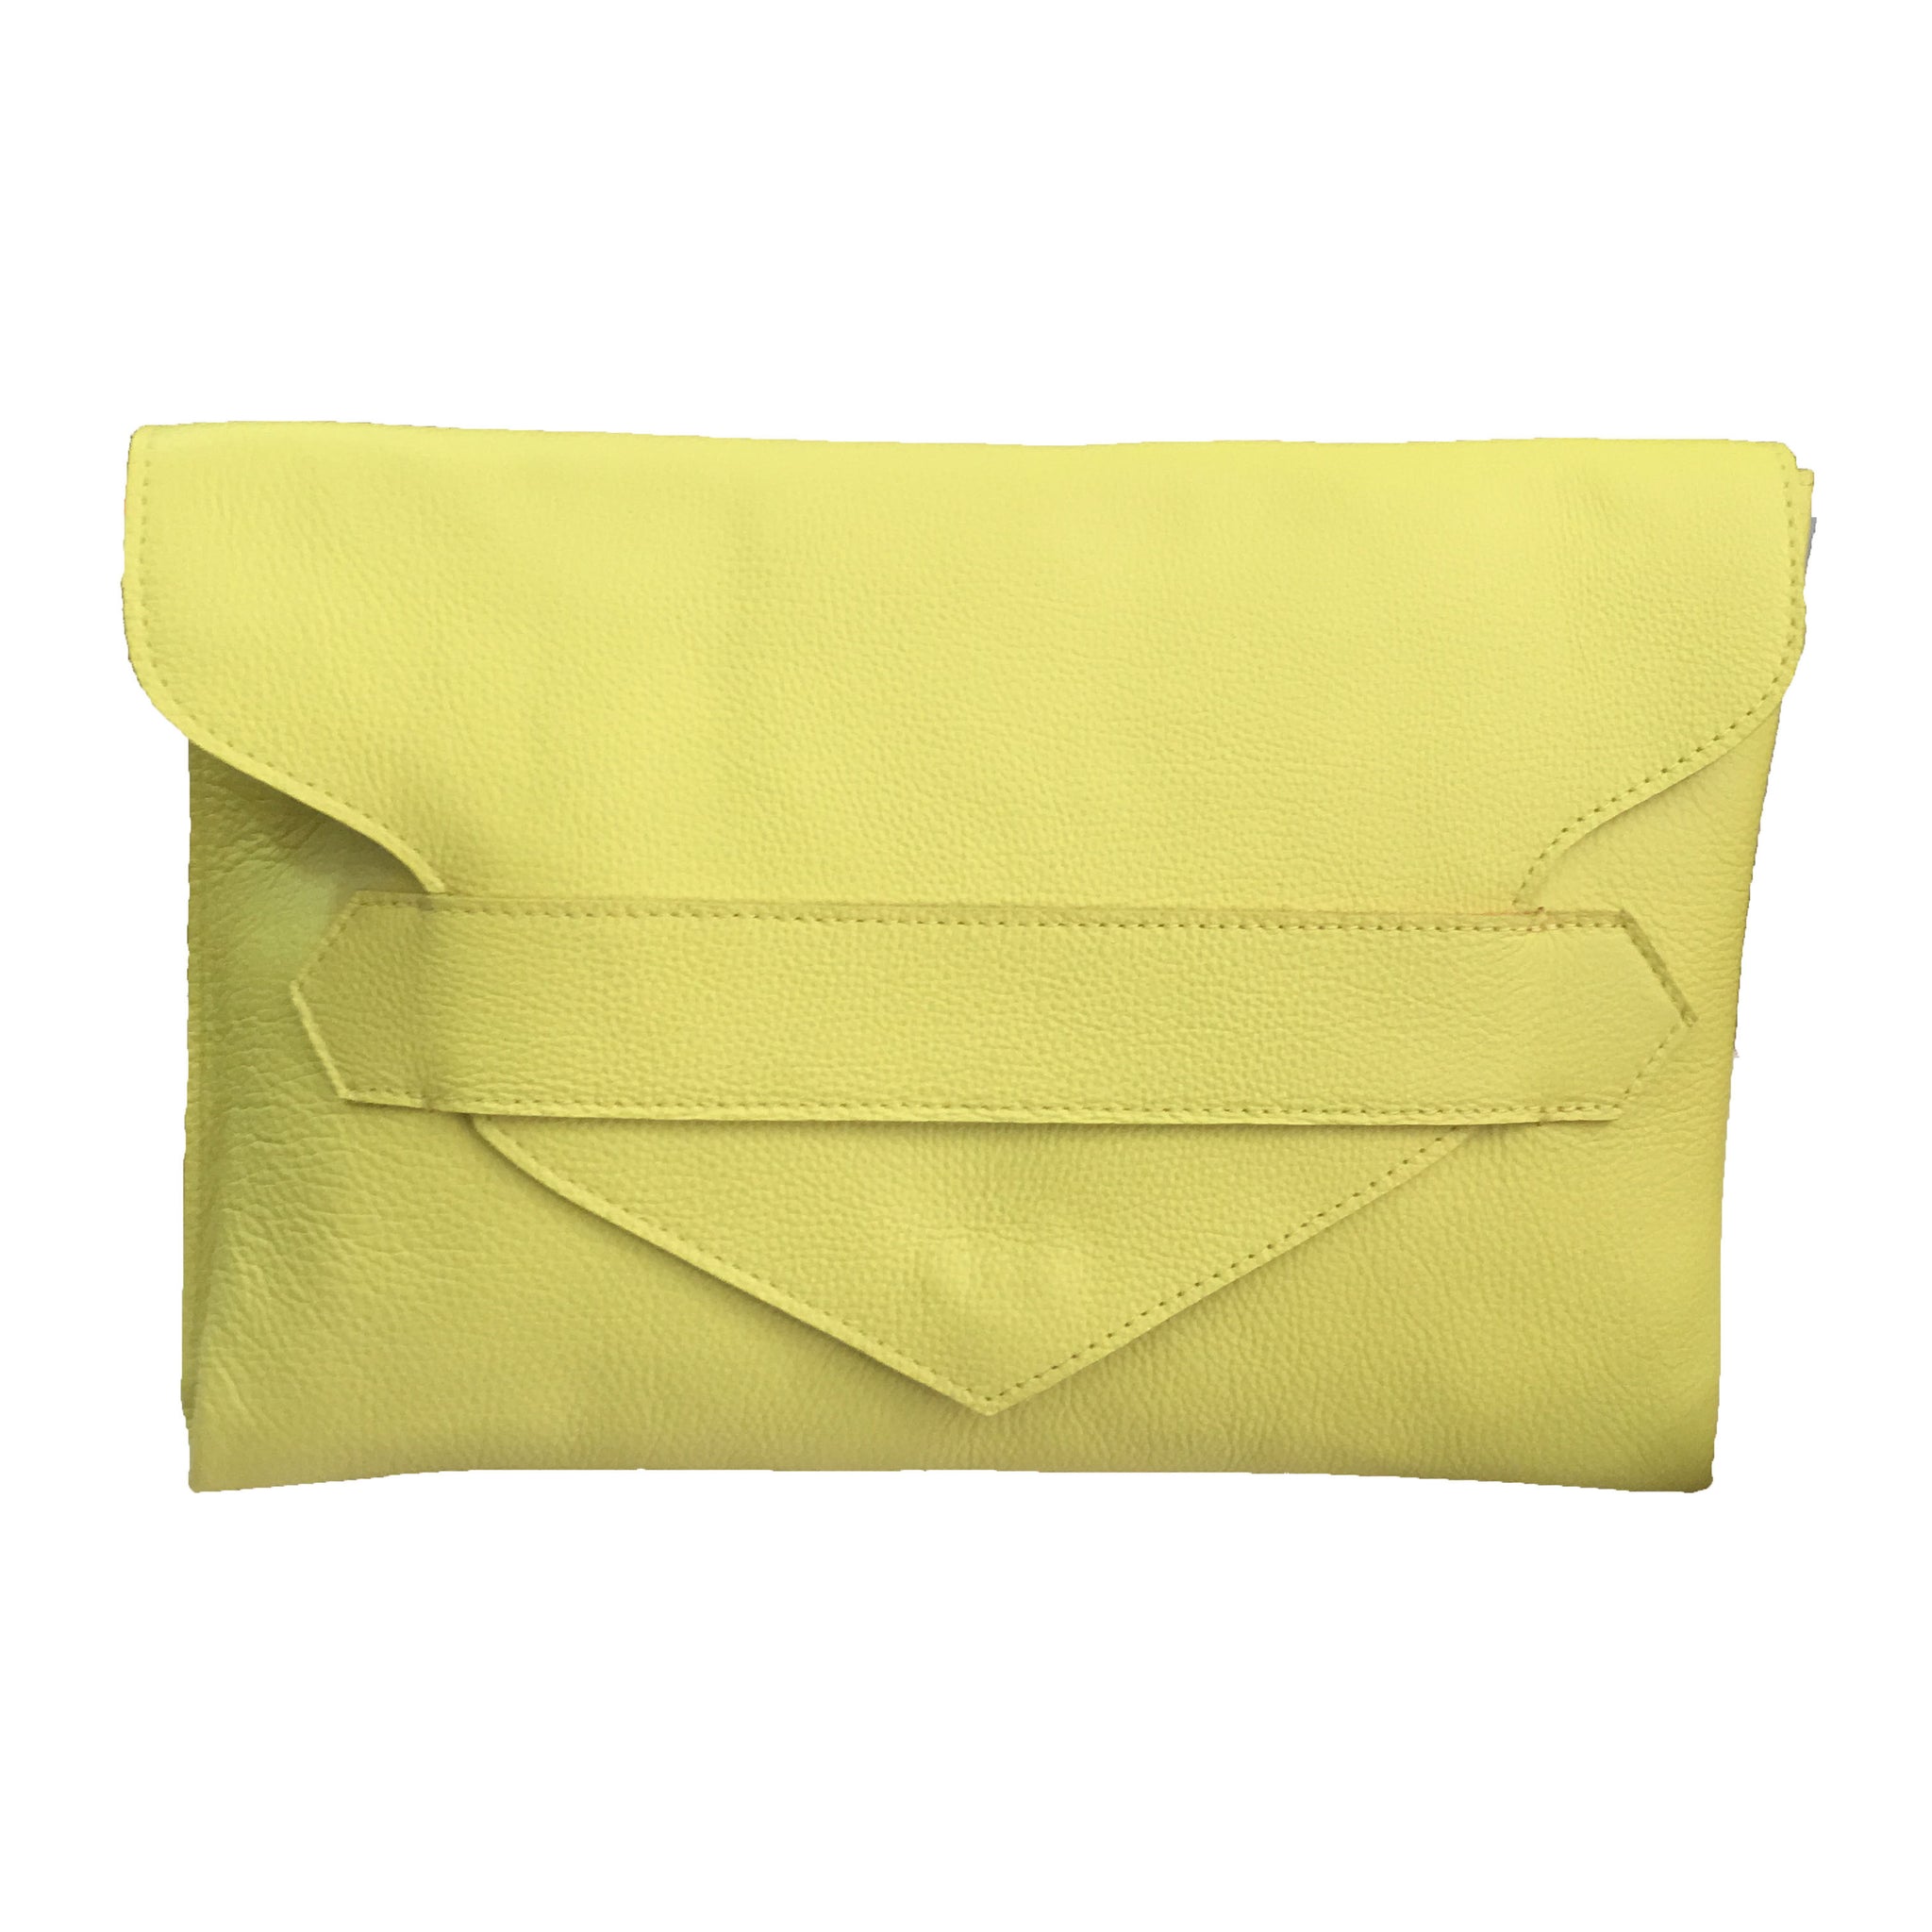 Pastel yellow purse | Yellow purses, Pastel yellow, Purses